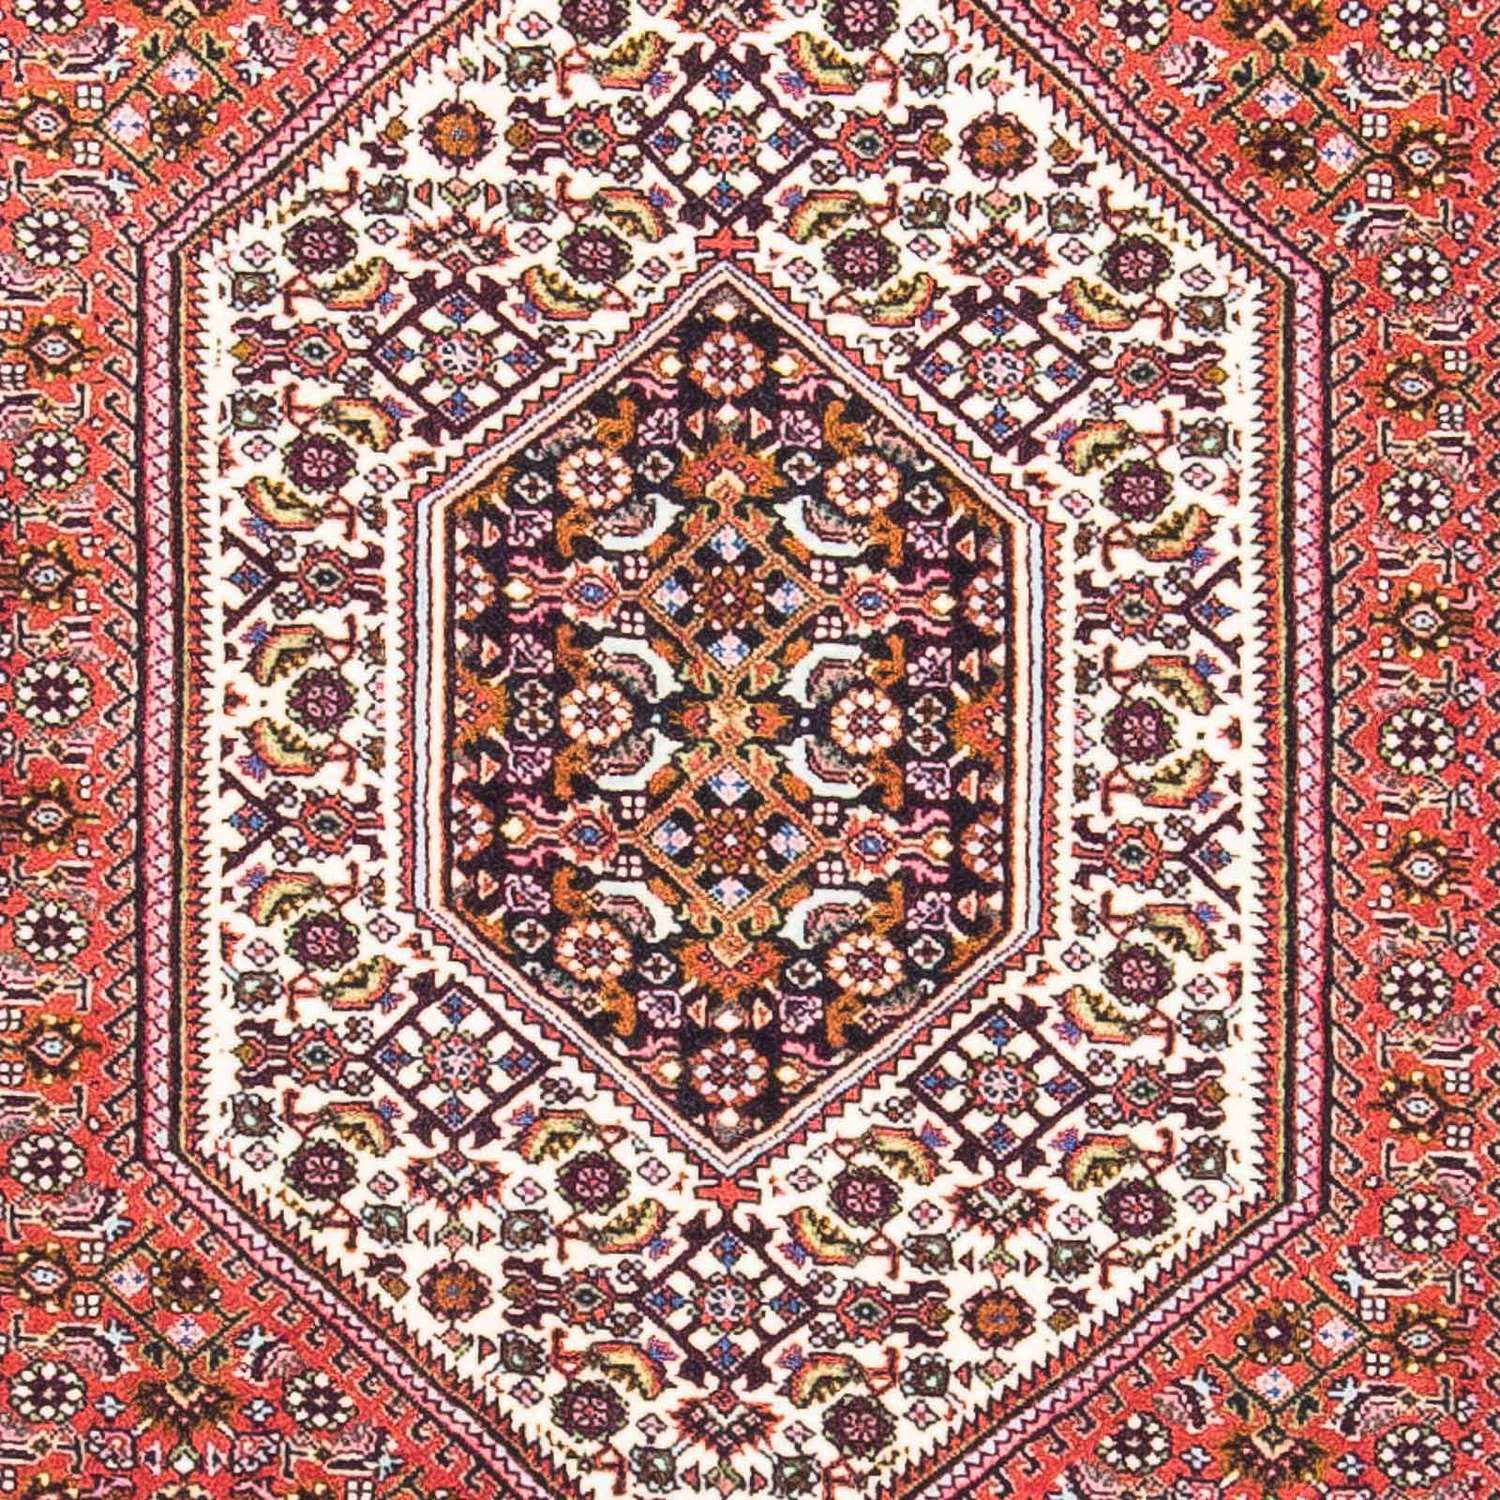 Tapete Persa - Bijar - 161 x 90 cm - vermelho claro